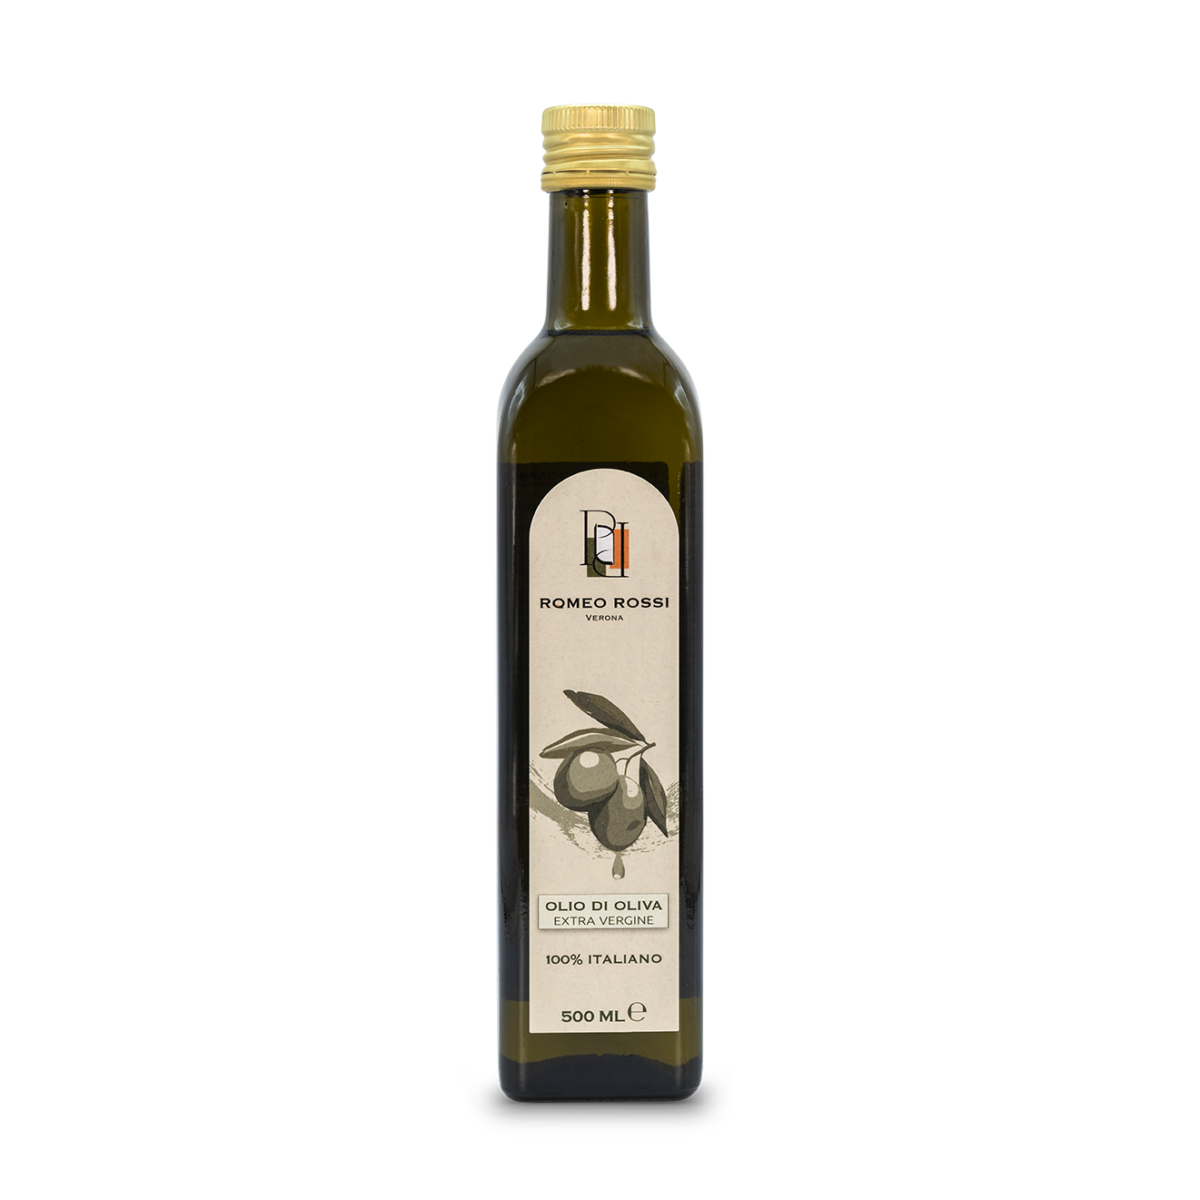 Оливковое масло olio Extra Verginiya di Oliva, 1000 мл. Carapelli 100 Italian Extra Virgin Olive. Olio di Sansa di Oliva конди. Масло оливковое Гранд ди олива нераф 500мл. Срок хранения оливкового масла